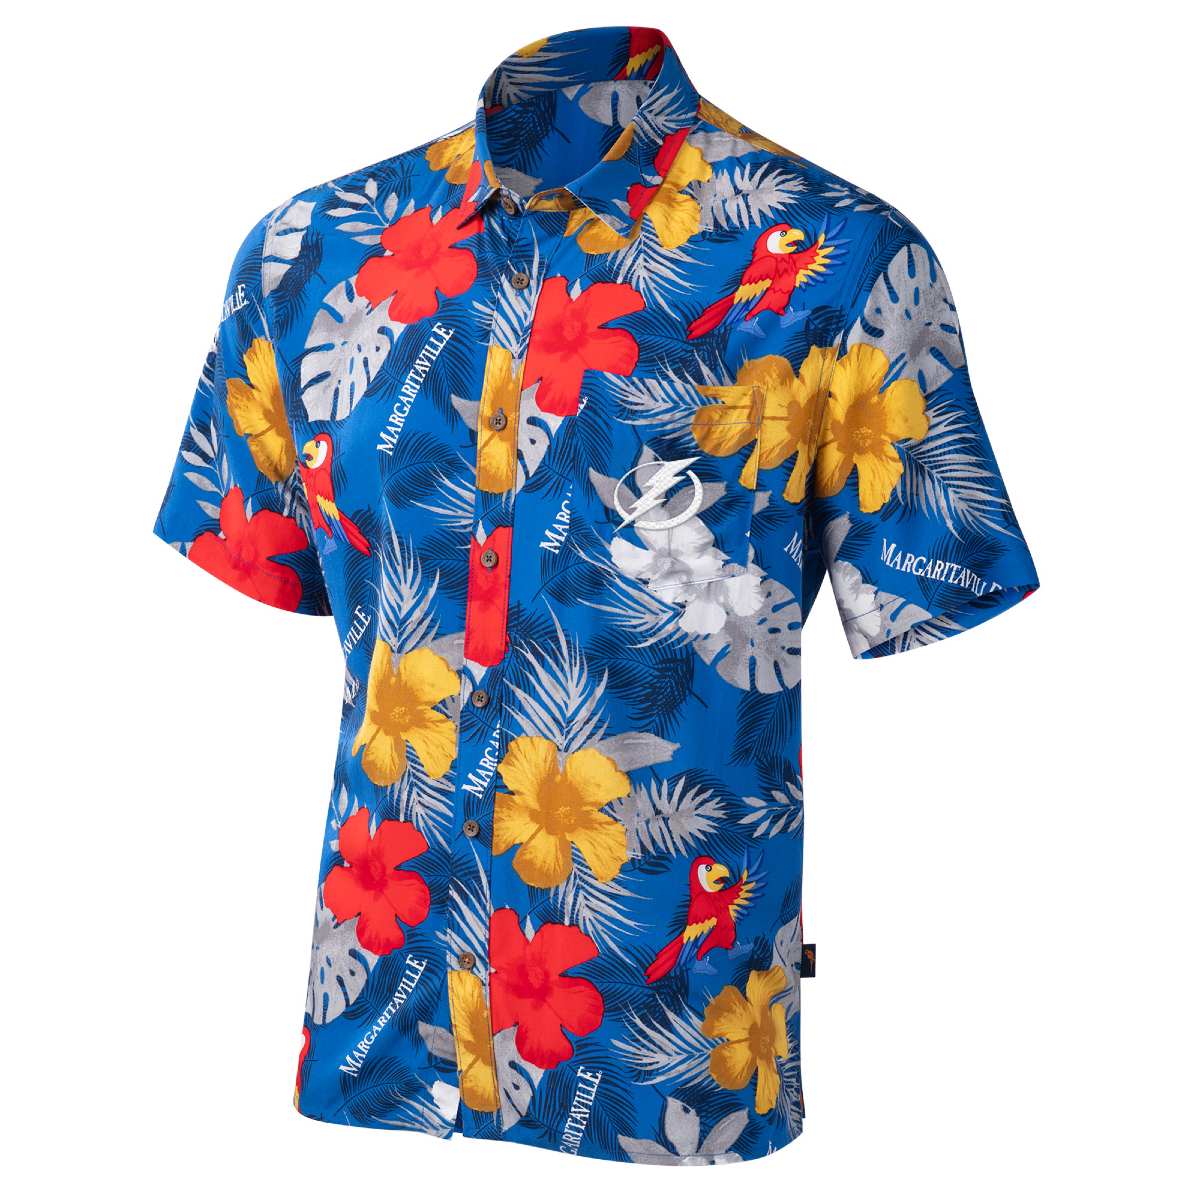 Men's Tampa Bay Lightning Margaritaville Island Life Floral Party Shirt